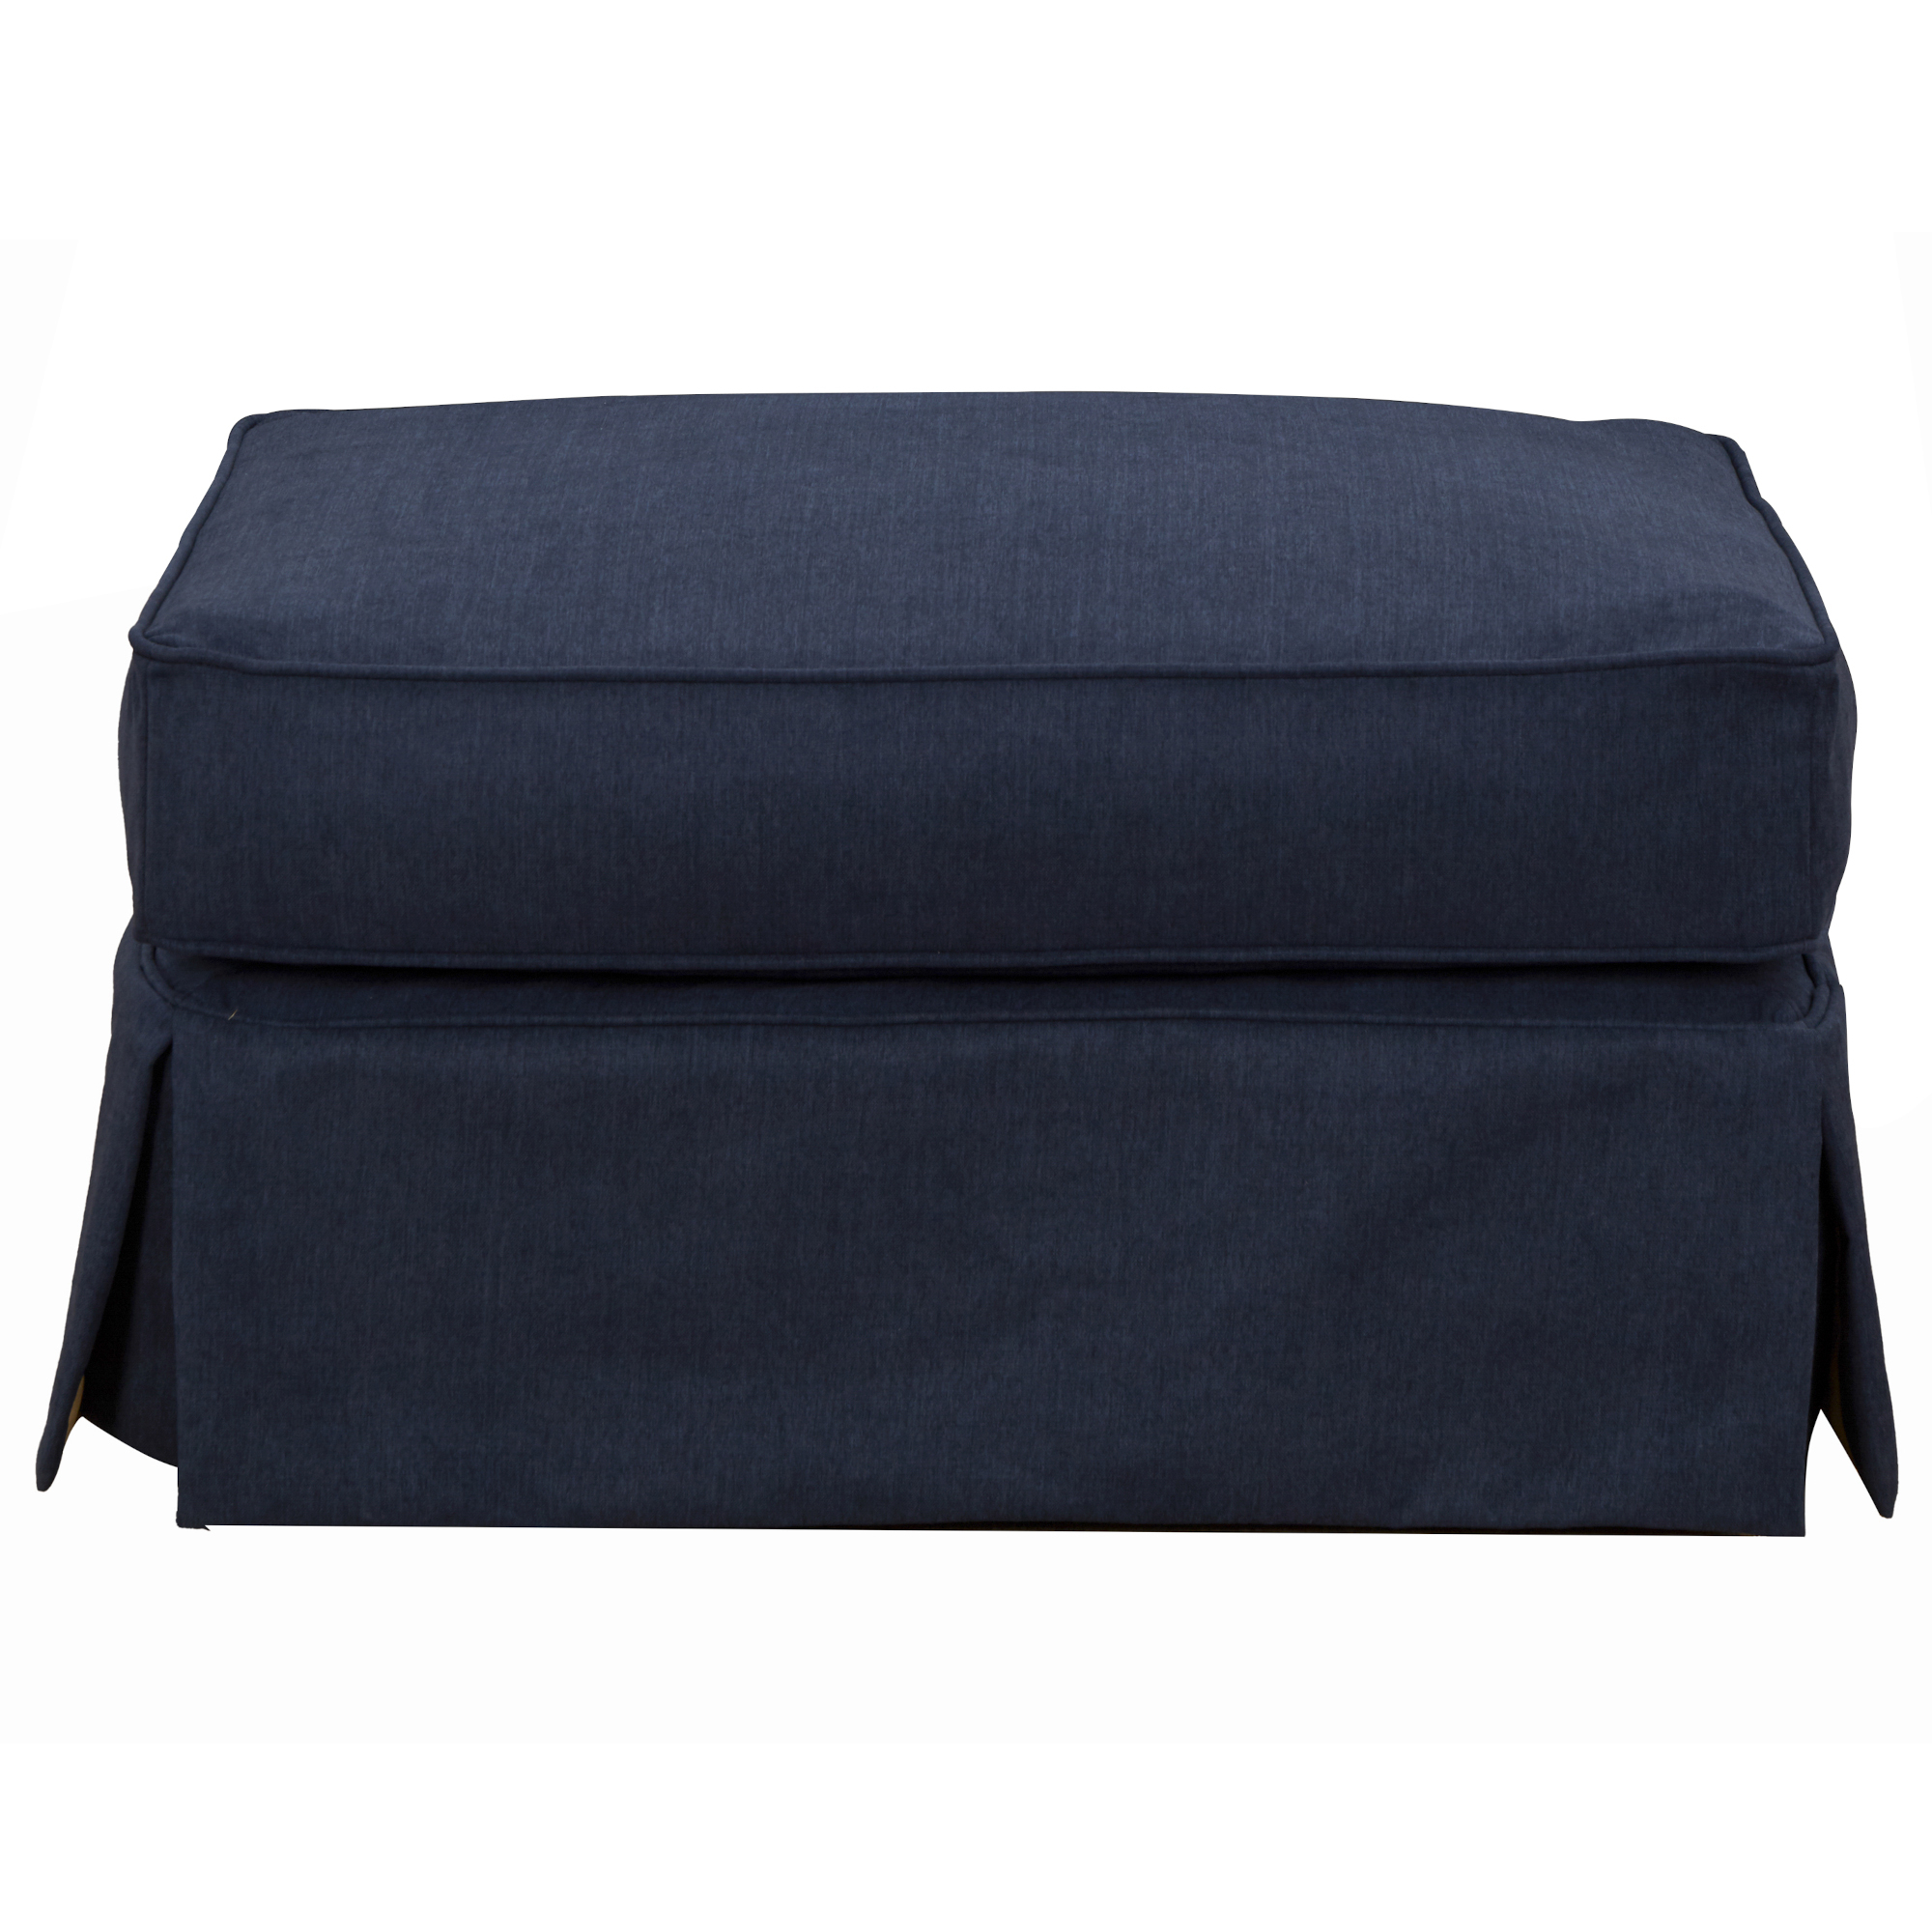 Americana Upholstered Pillow Top Ottoman - Navy Blue